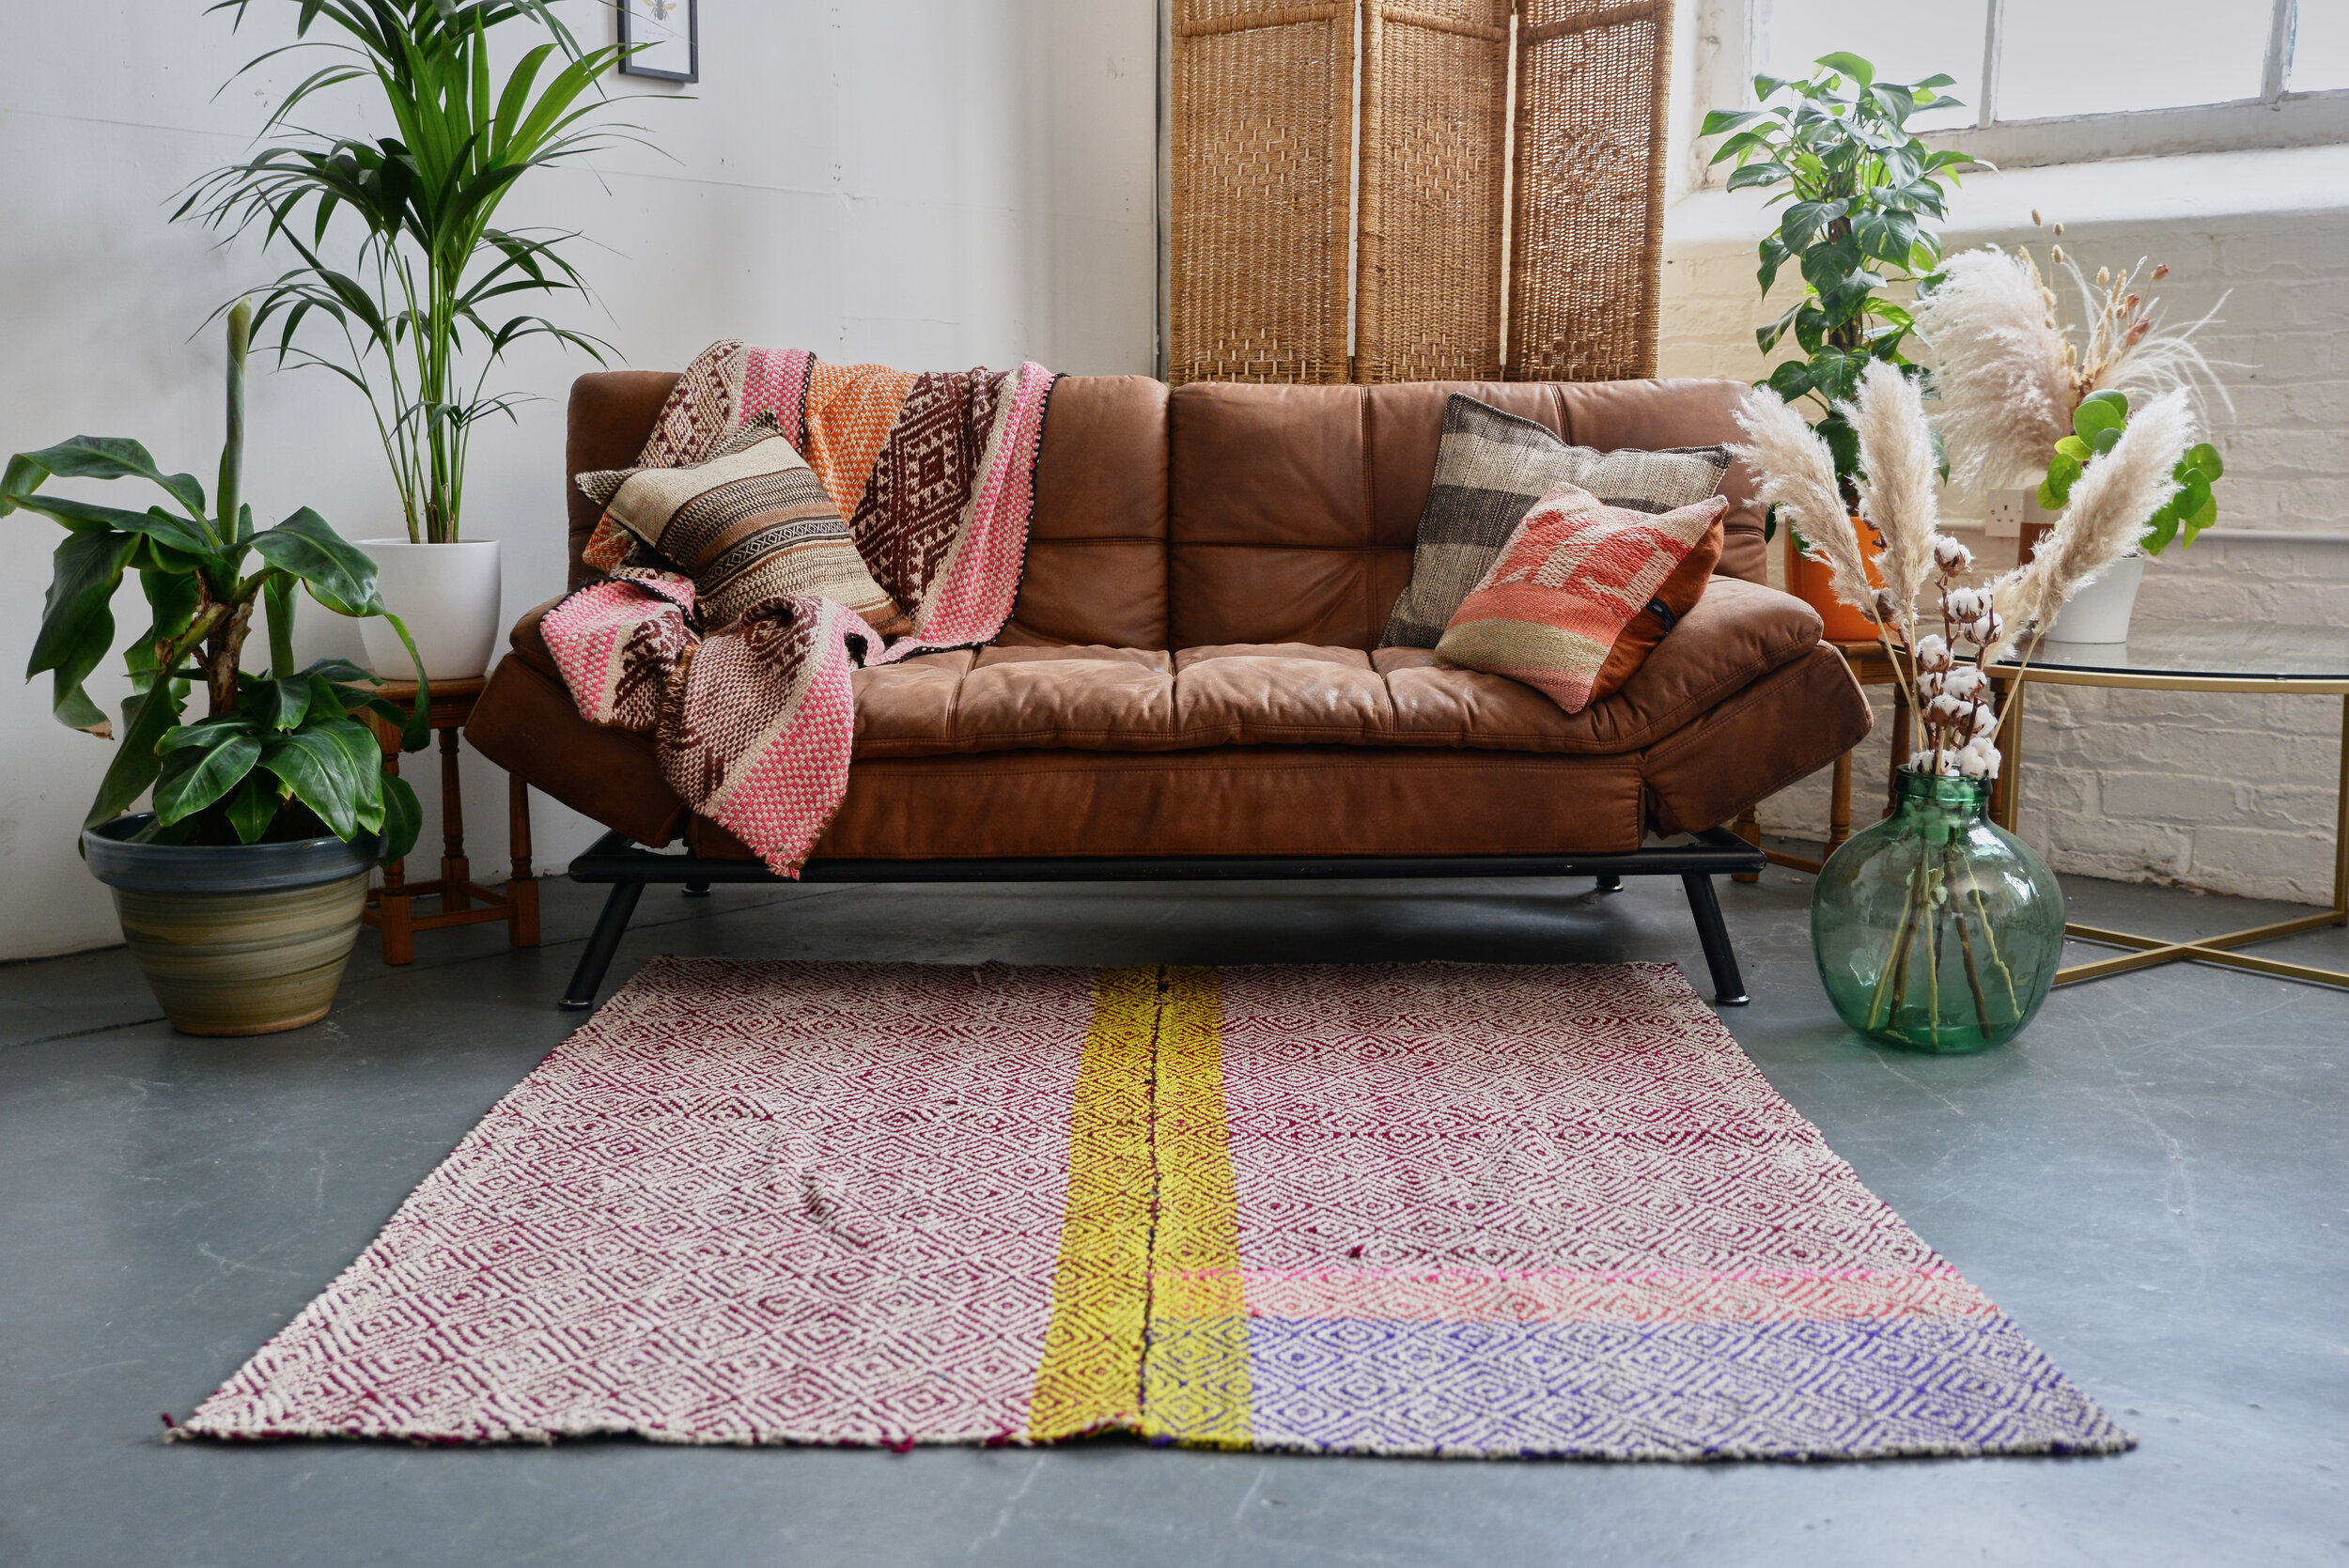 Deborah rug from woven rosa